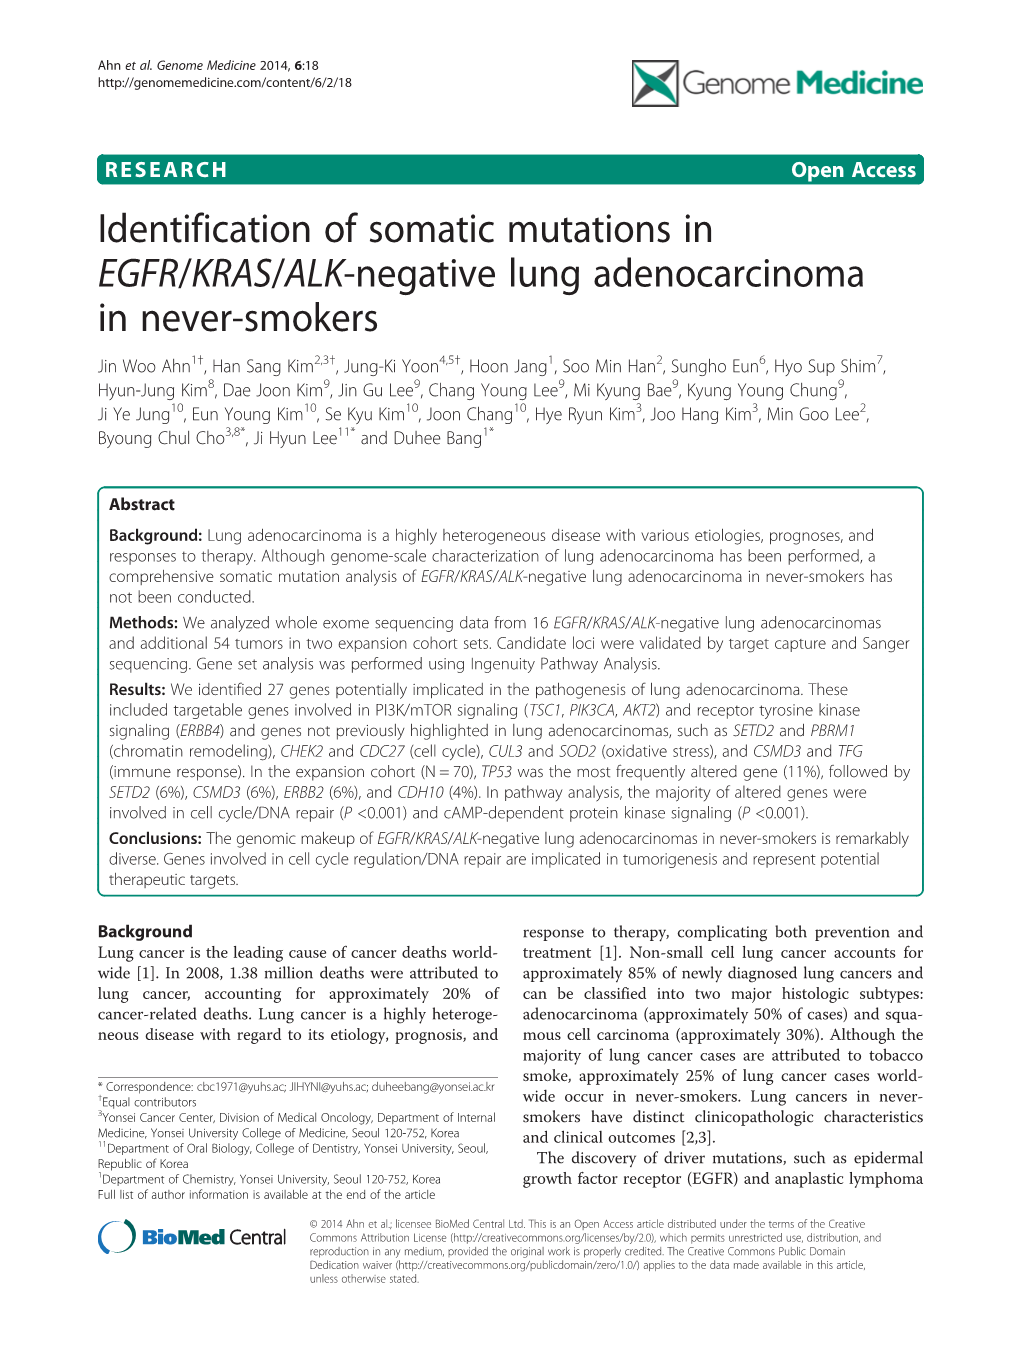 Identification of Somatic Mutations in EGFR/KRAS/ALK-Negative Lung